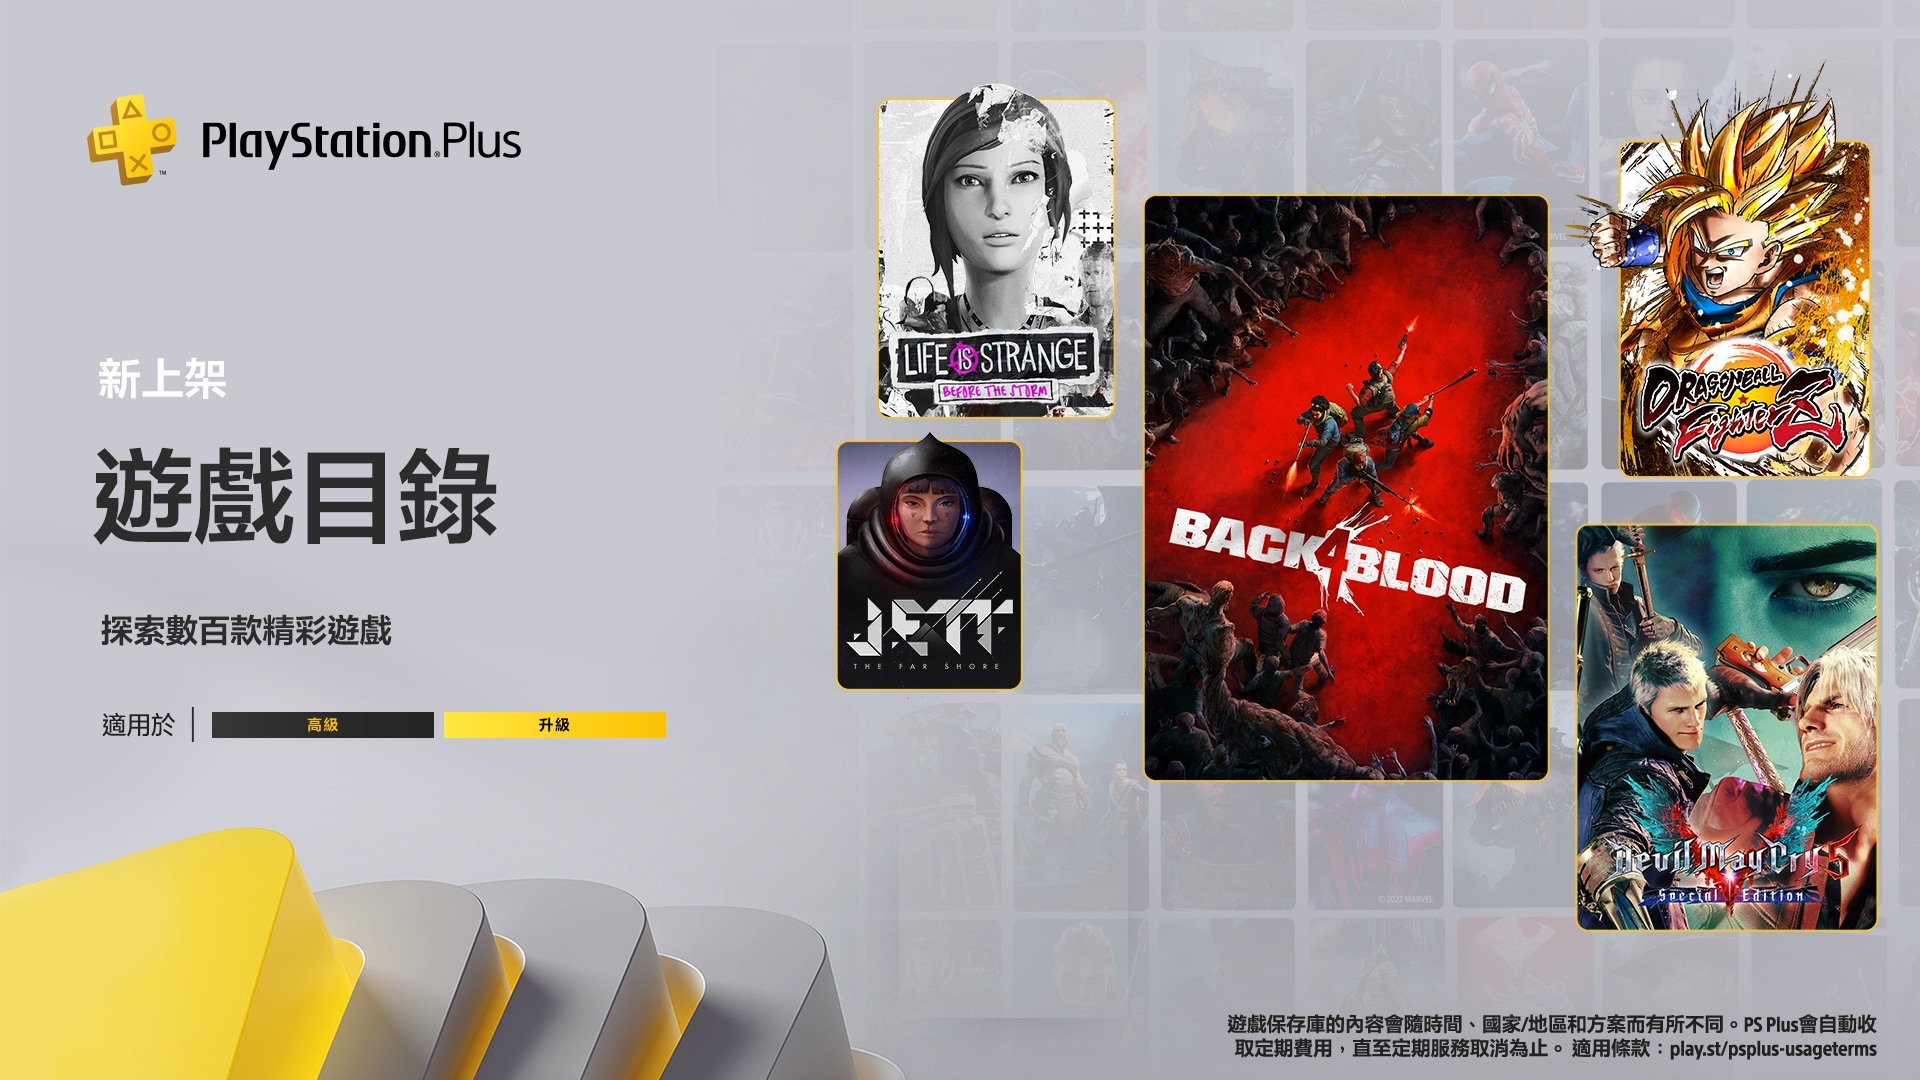 PS Plus 公布 1 月份订阅制游戏目录阵容 包含《七龙珠 FighterZ》《恶魔猎人 5》等作品插图